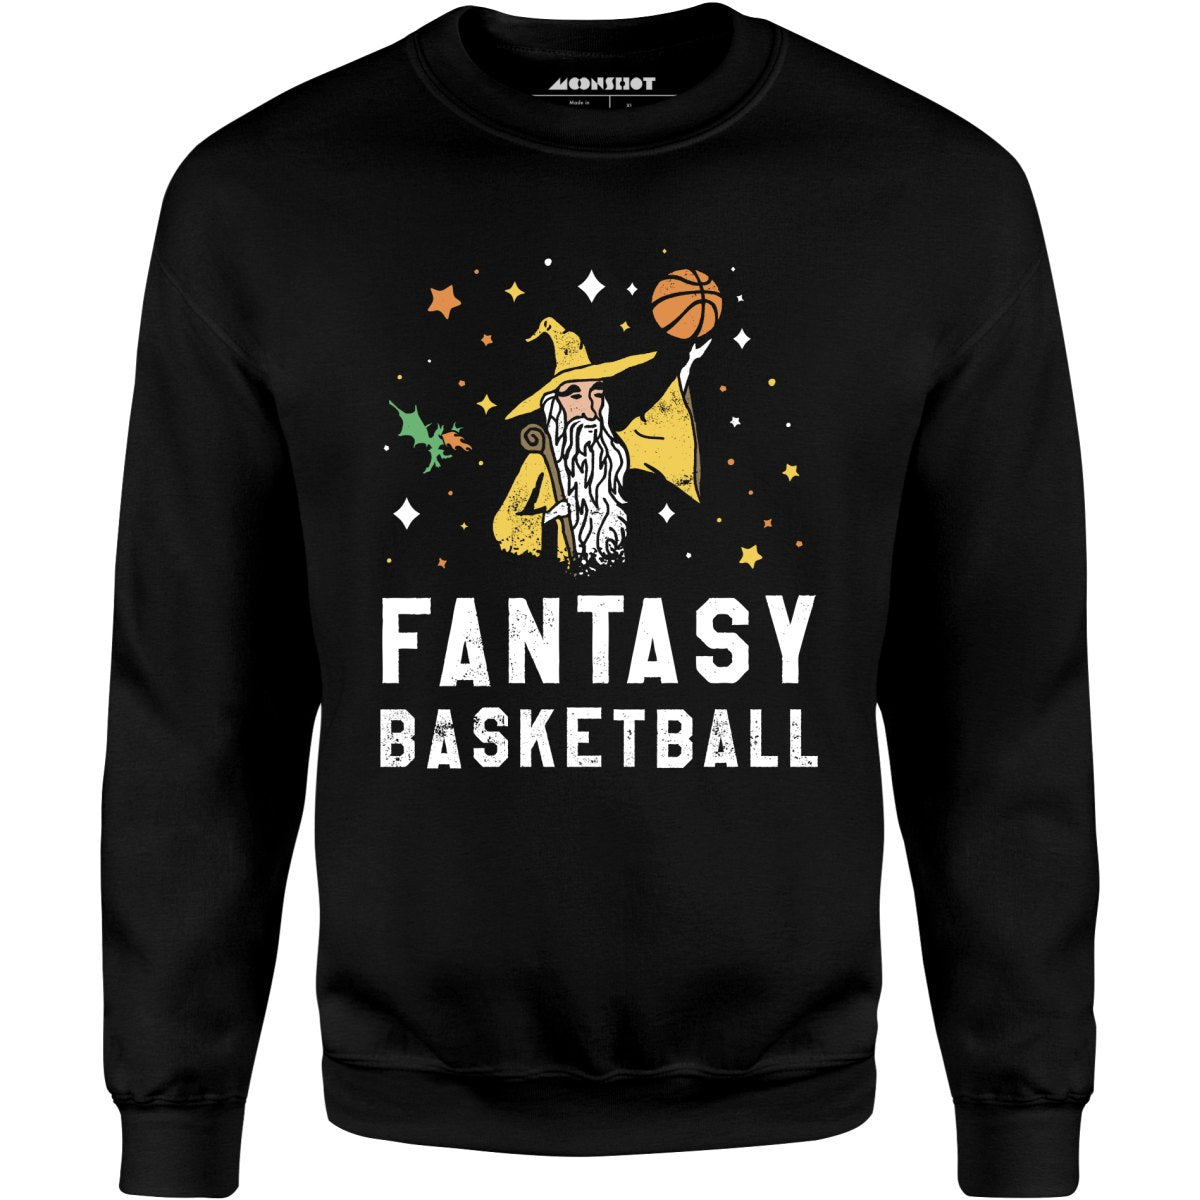 Fantasy Basketball - Unisex Sweatshirt